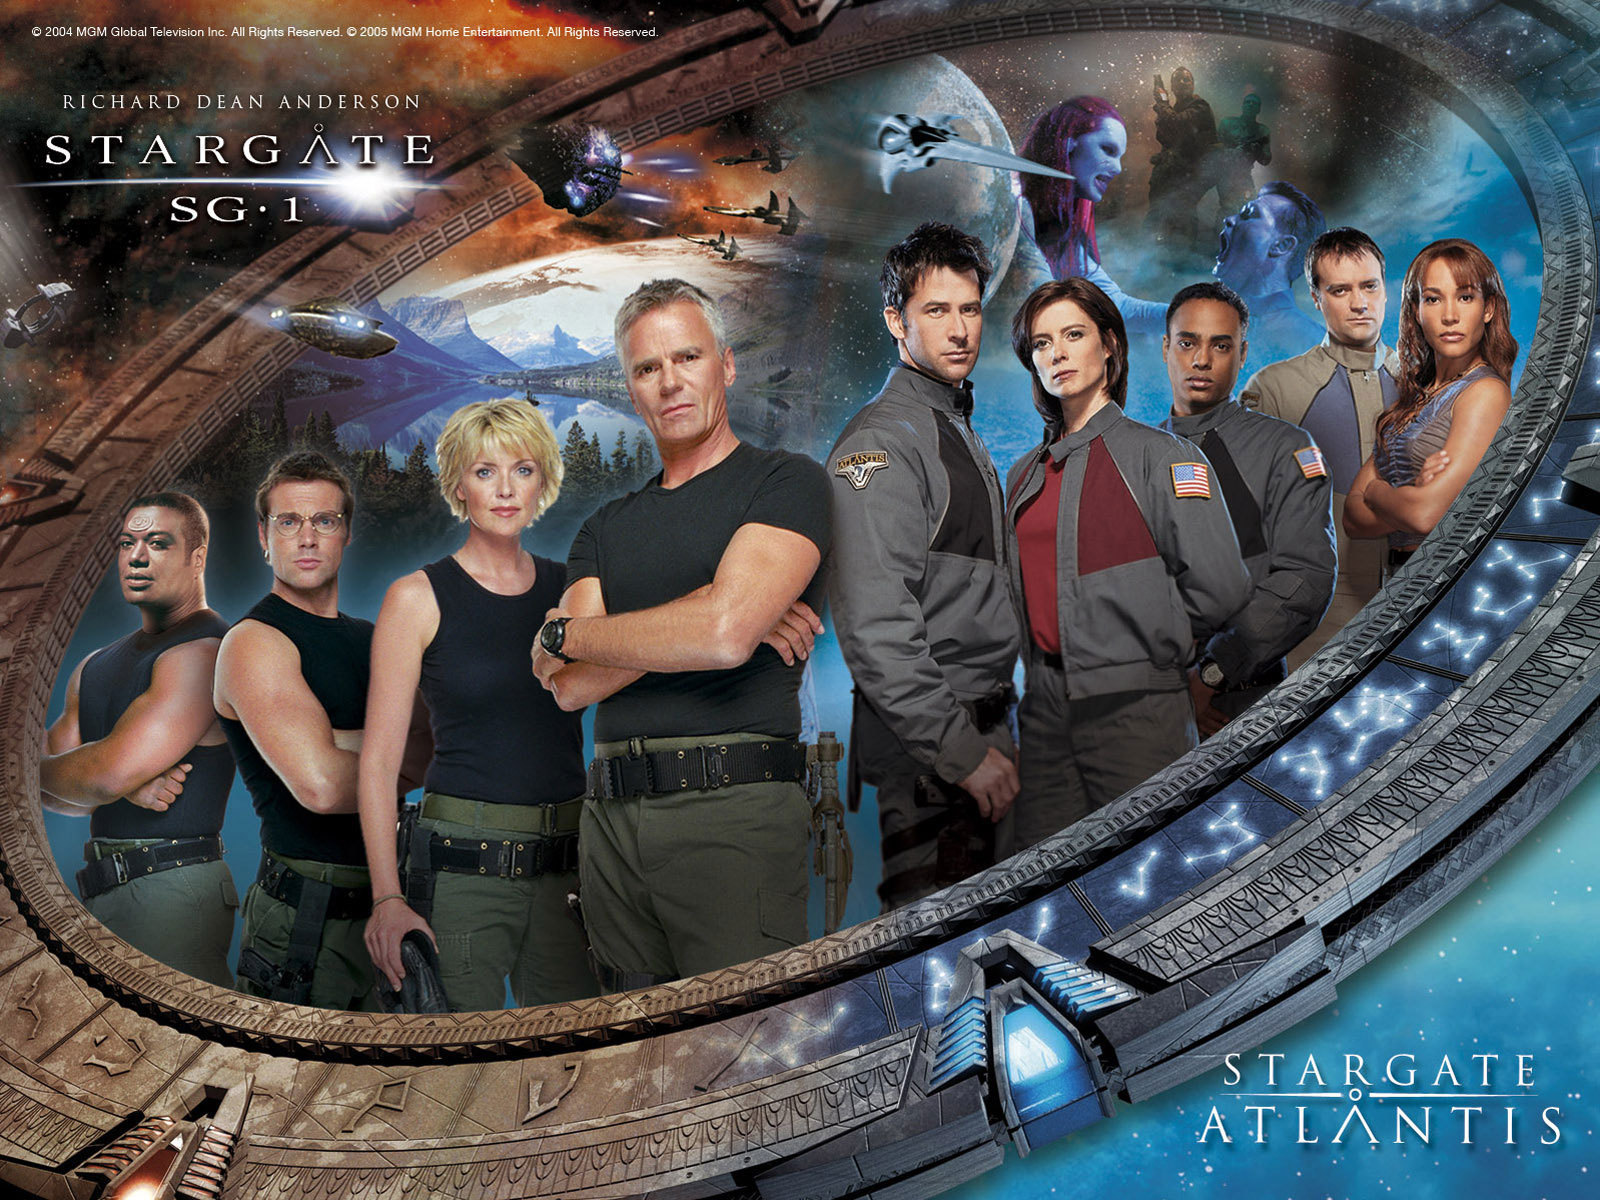 Watch Stargate SG1 - Season 7 Full Movie on FMovies.to